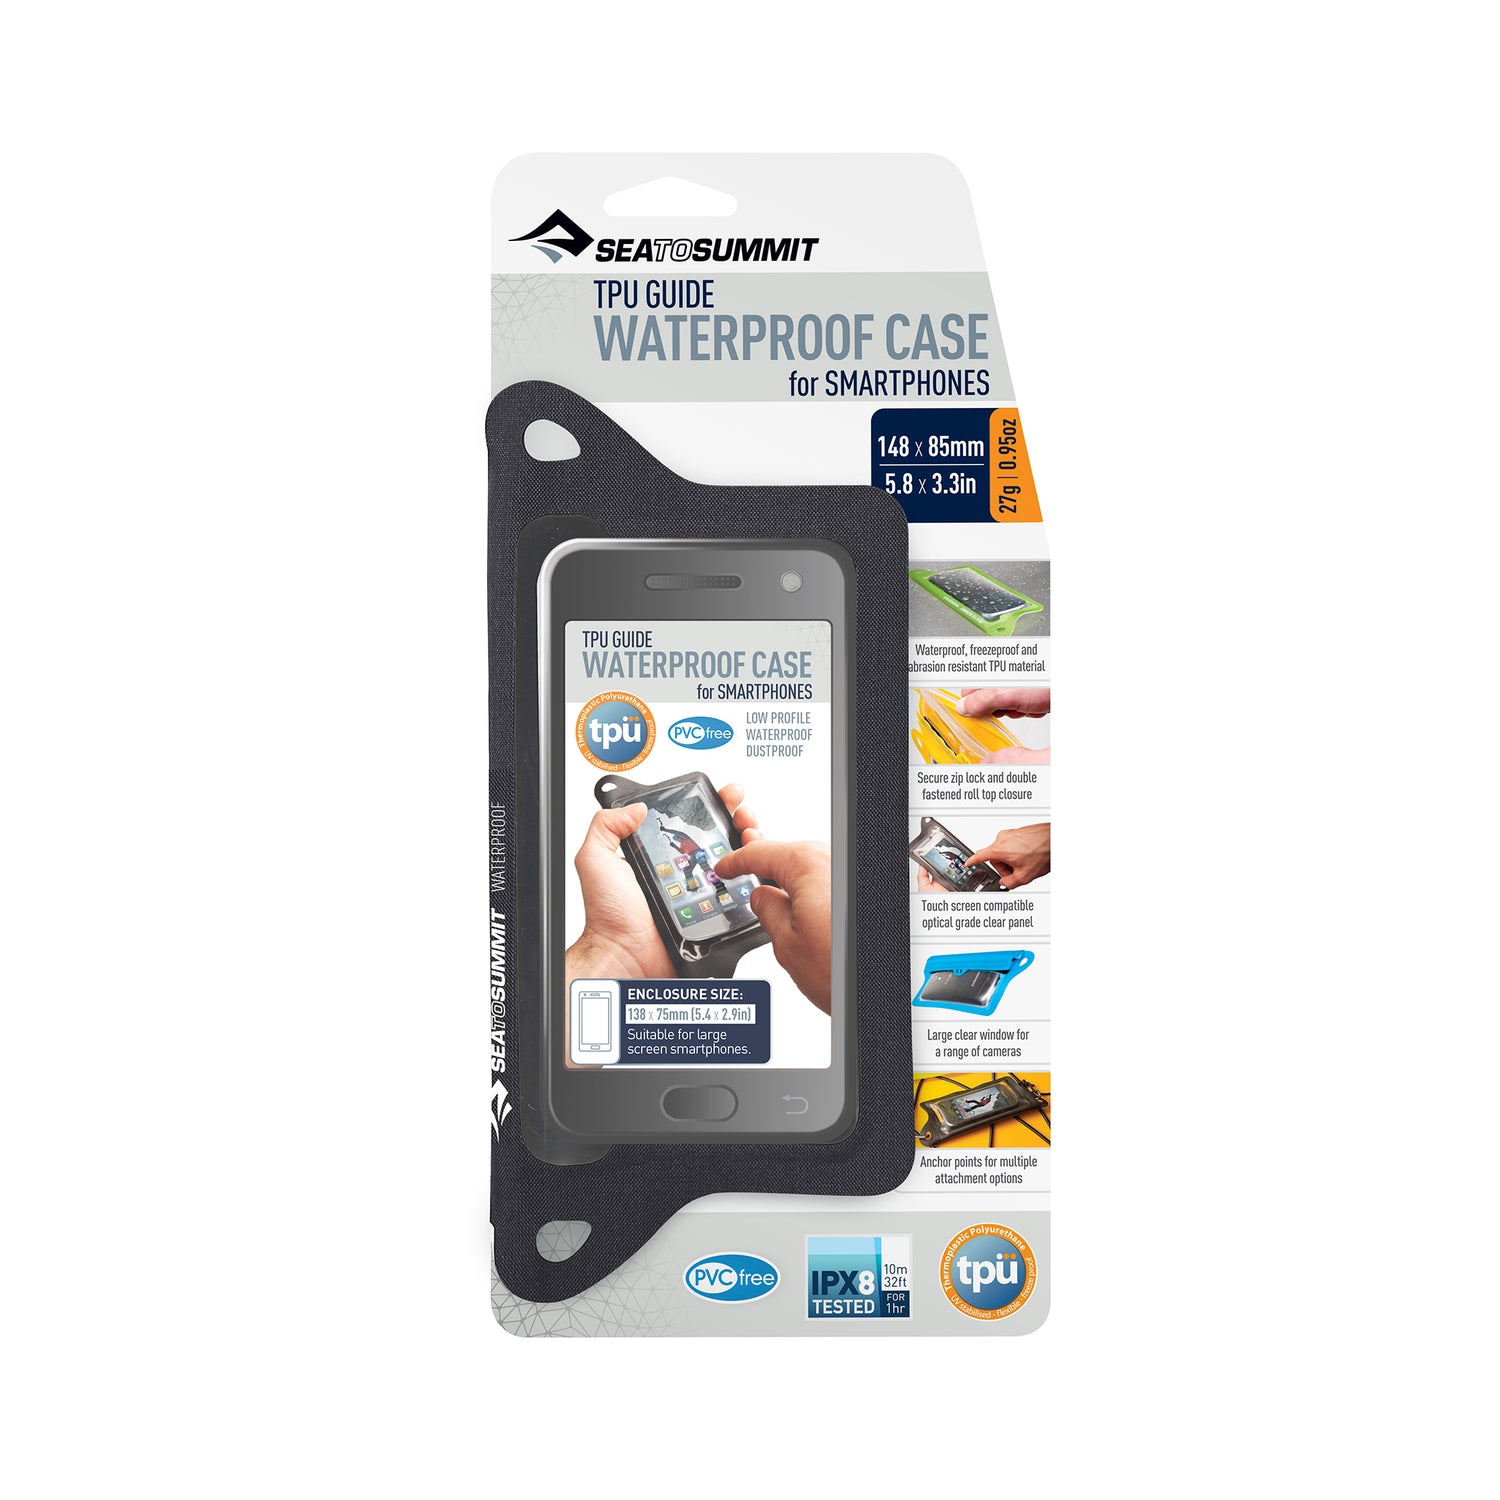 Sea to Summit TPU Guide Waterproof Case for Large Smartphones - Black